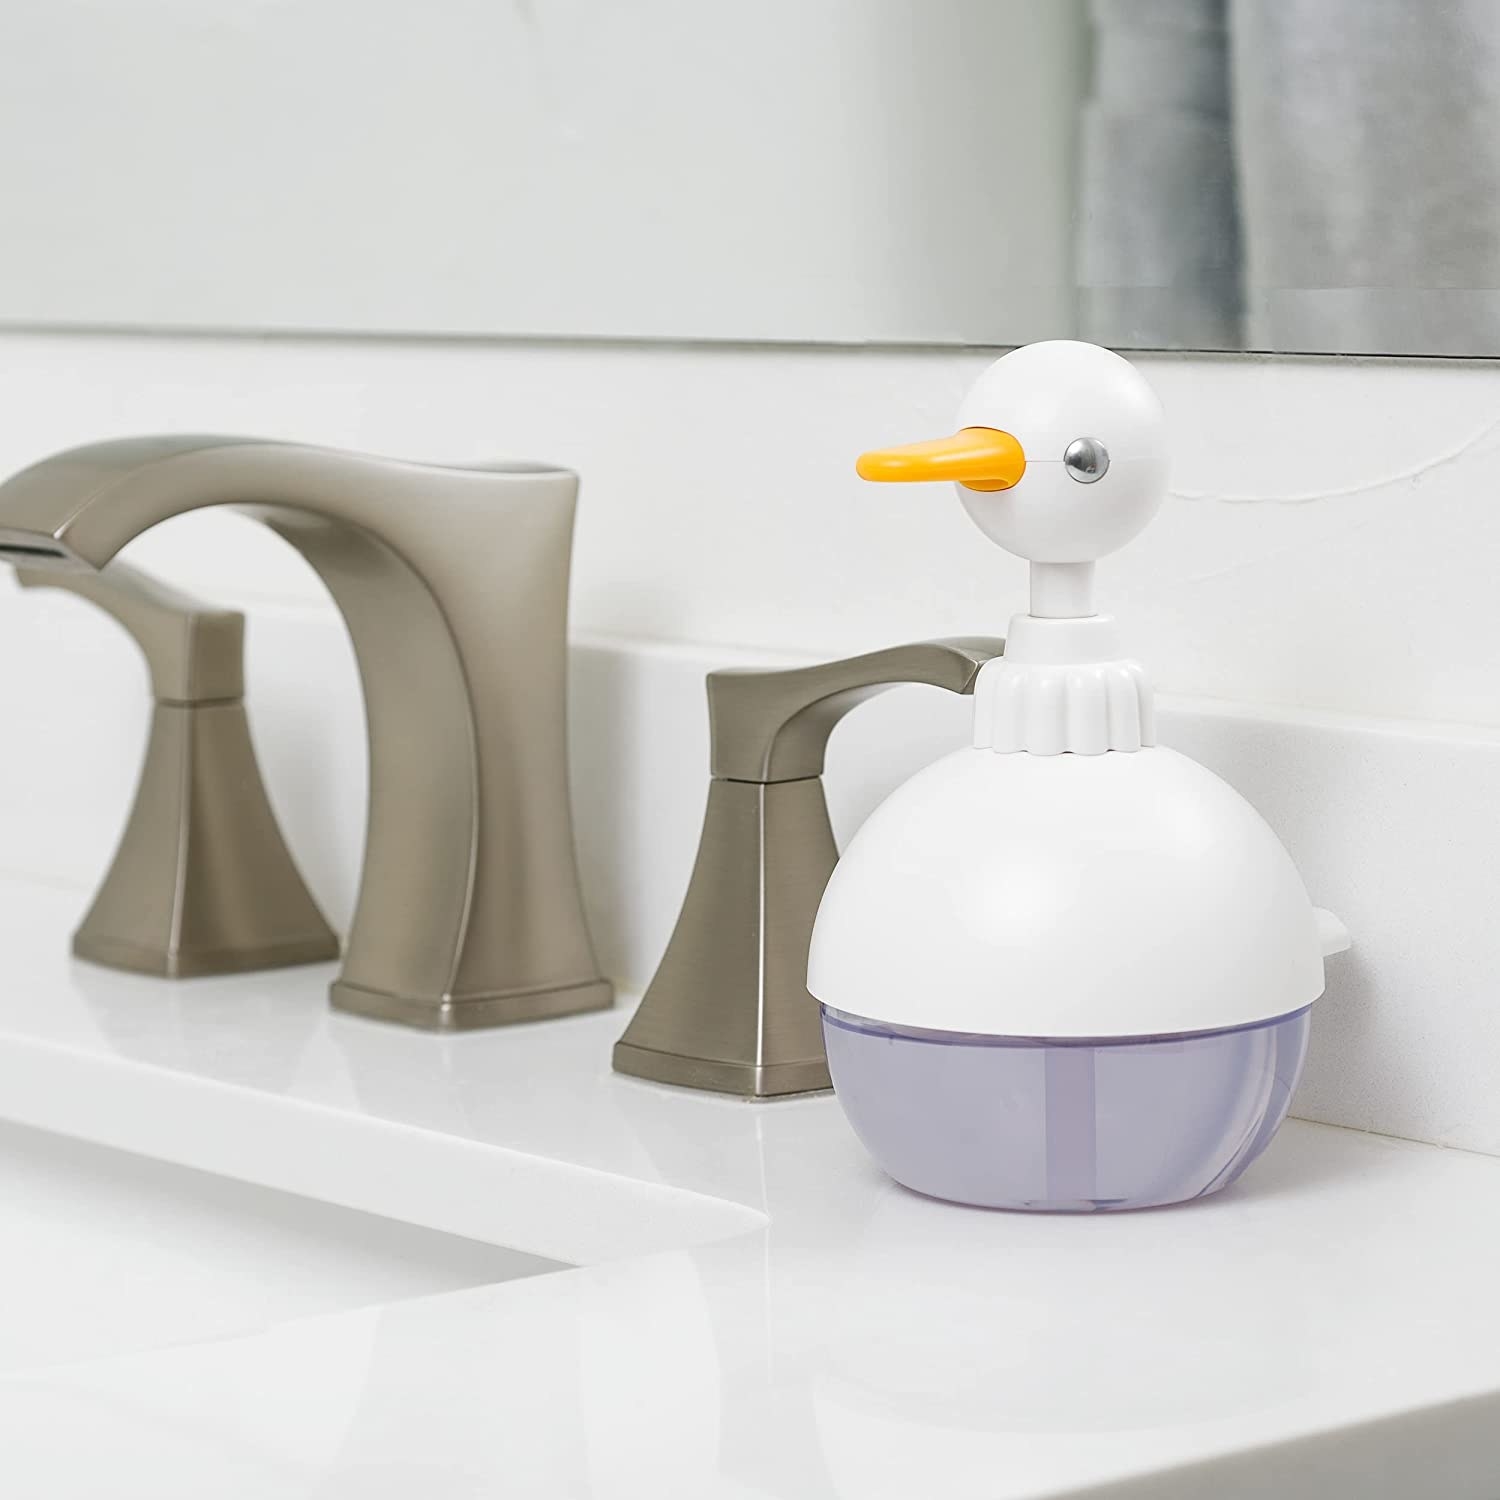 duck shaped soap dispenser